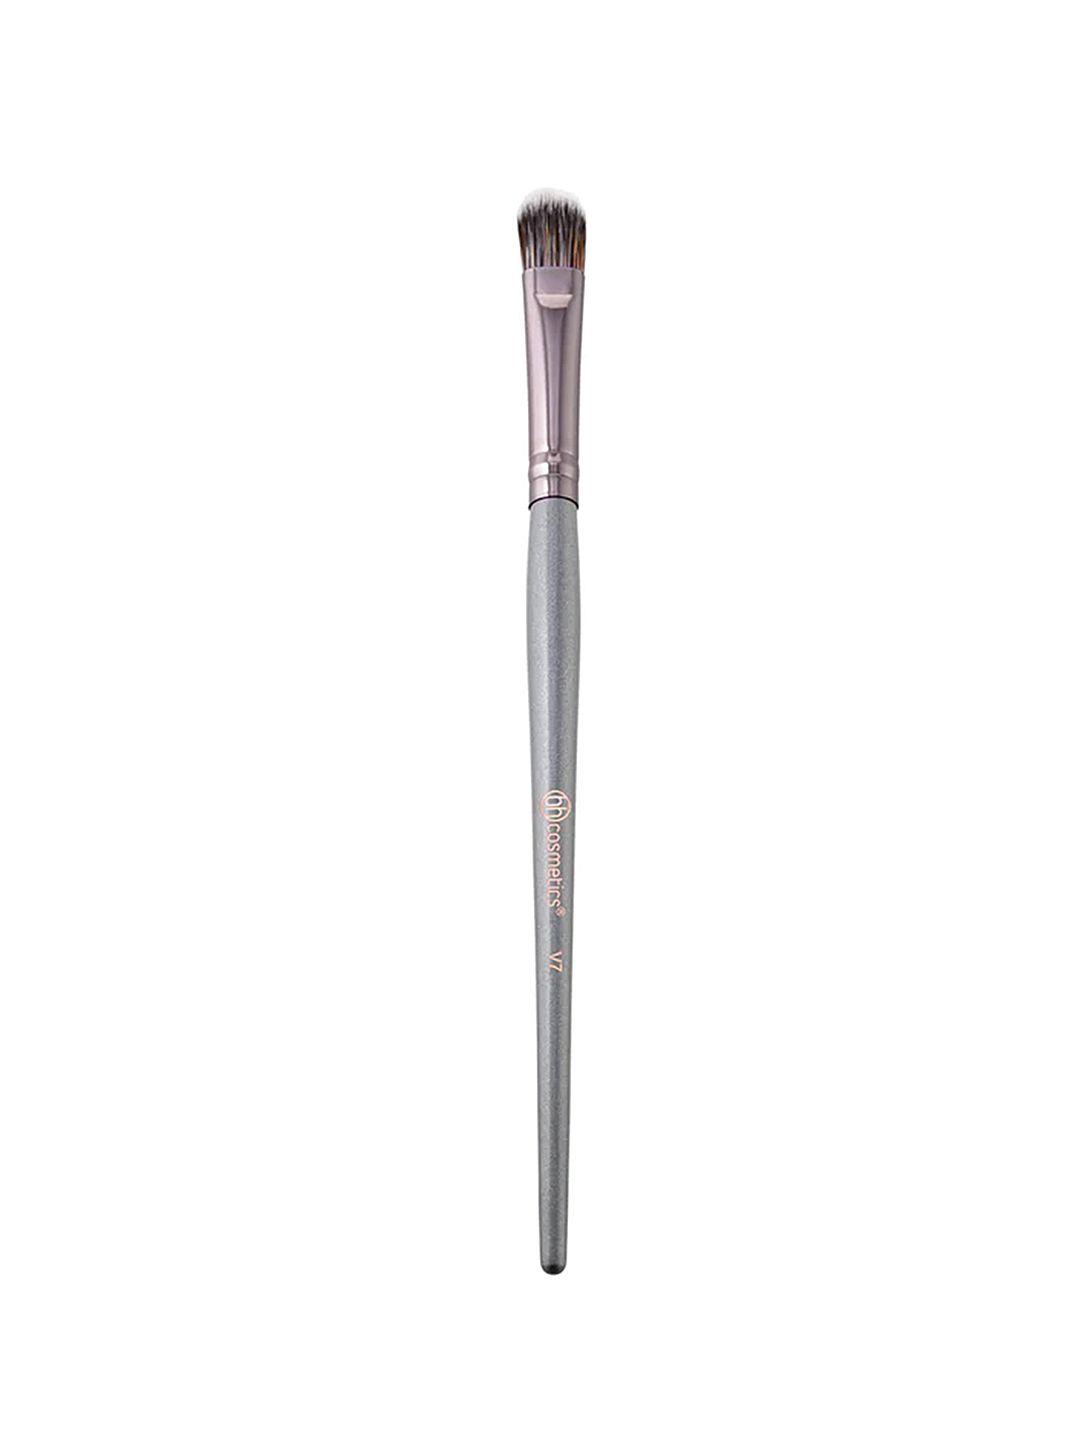 bh cosmetics v7 vegan concealer brush - silver-toned